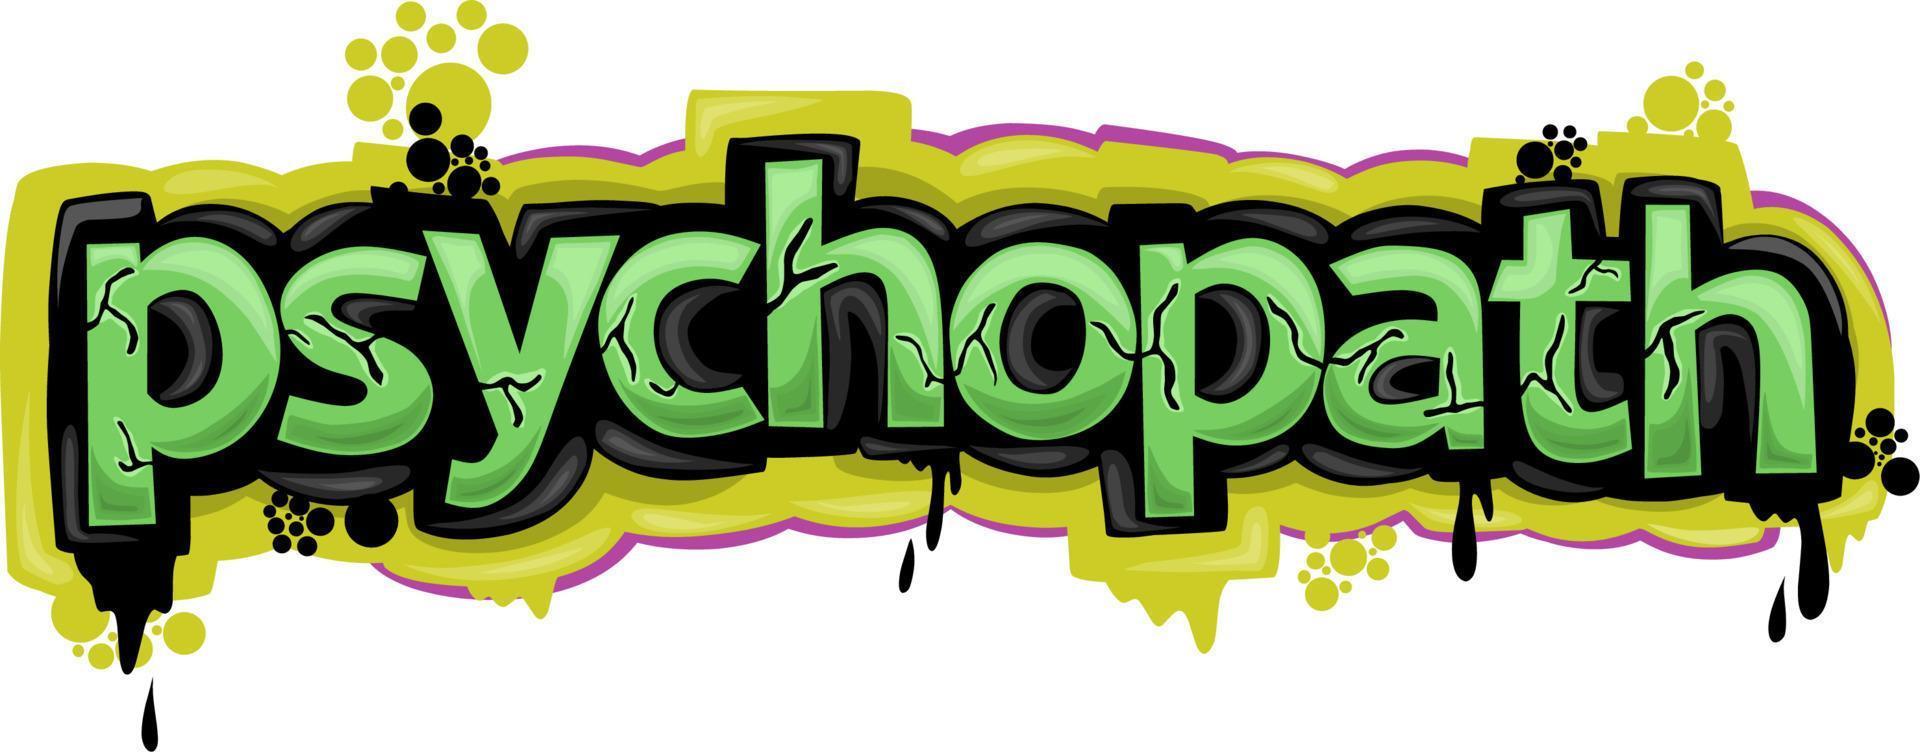 cool PSYCHOPATH writing graffiti design vector